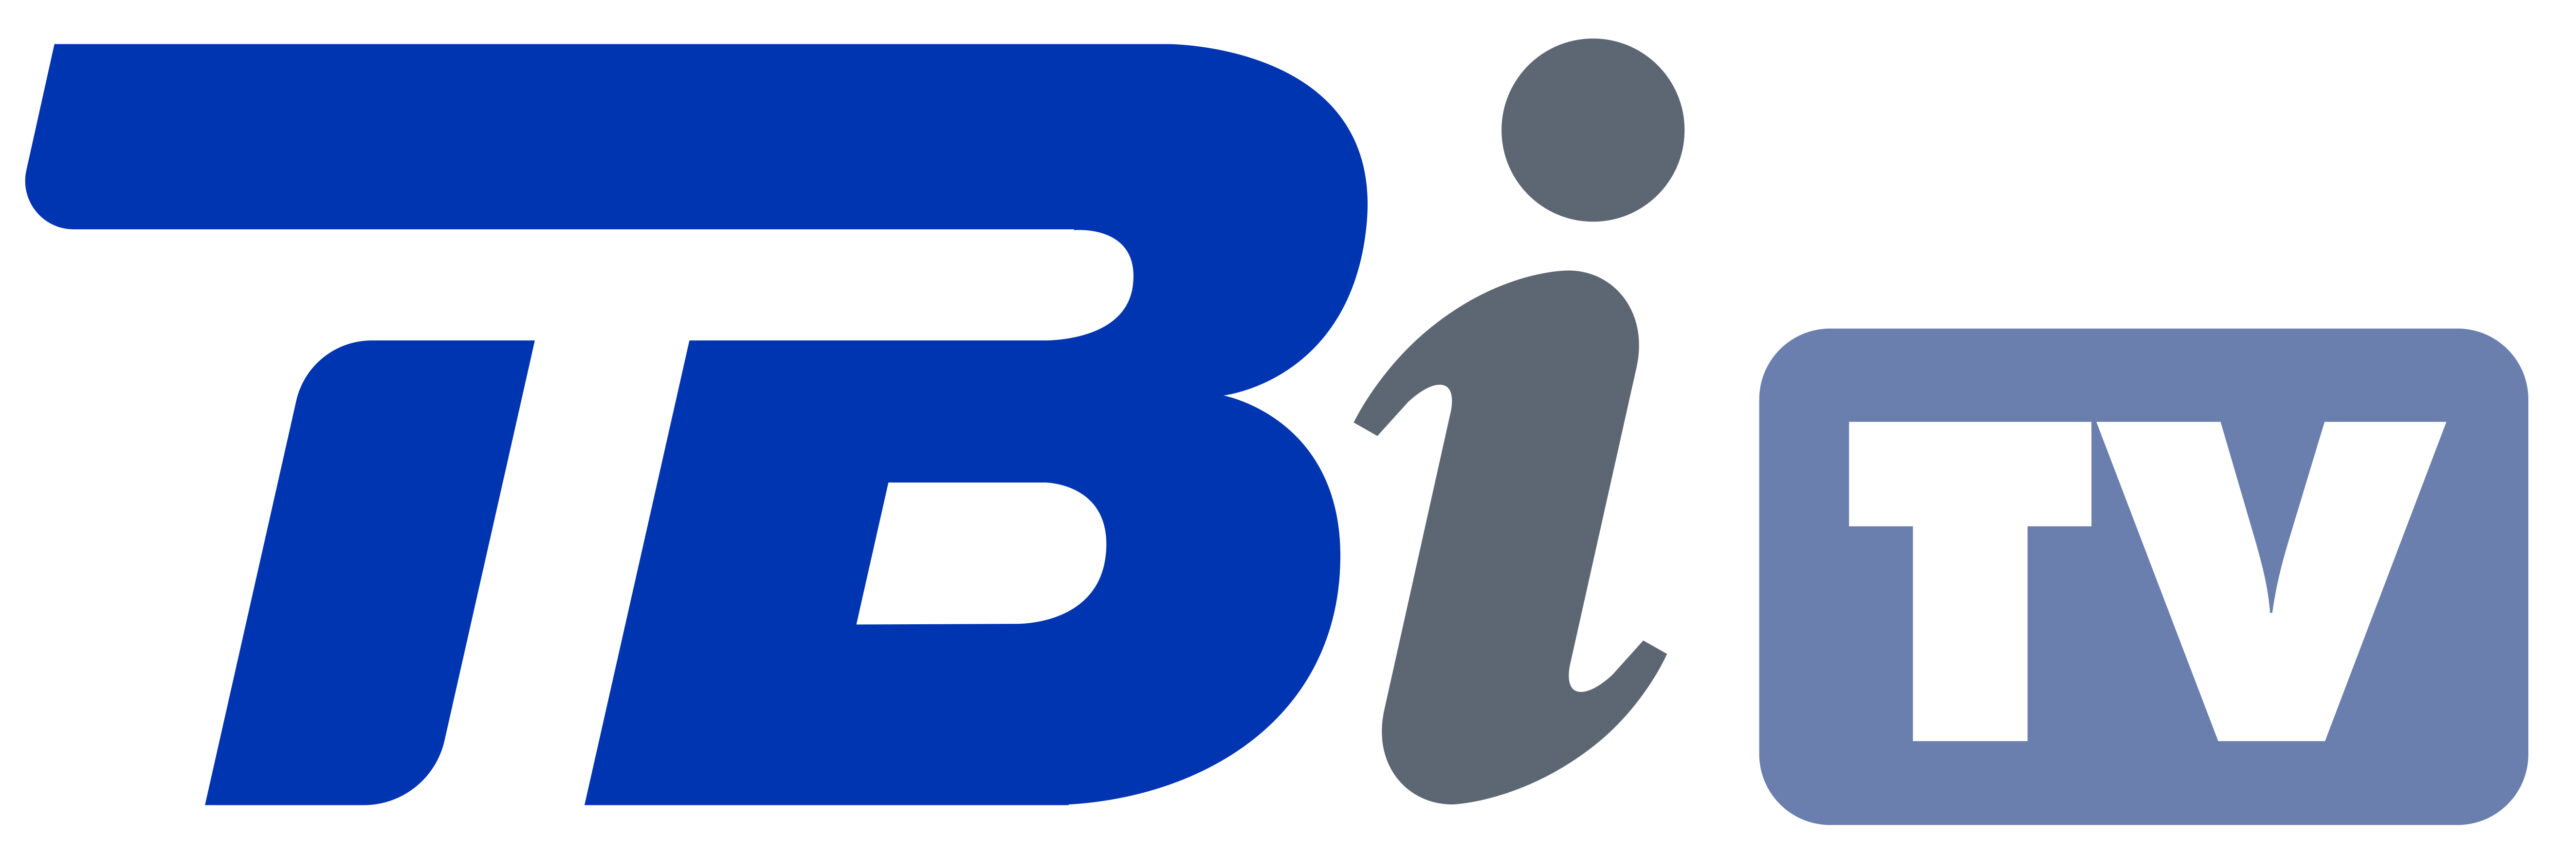 TBi-TV logo